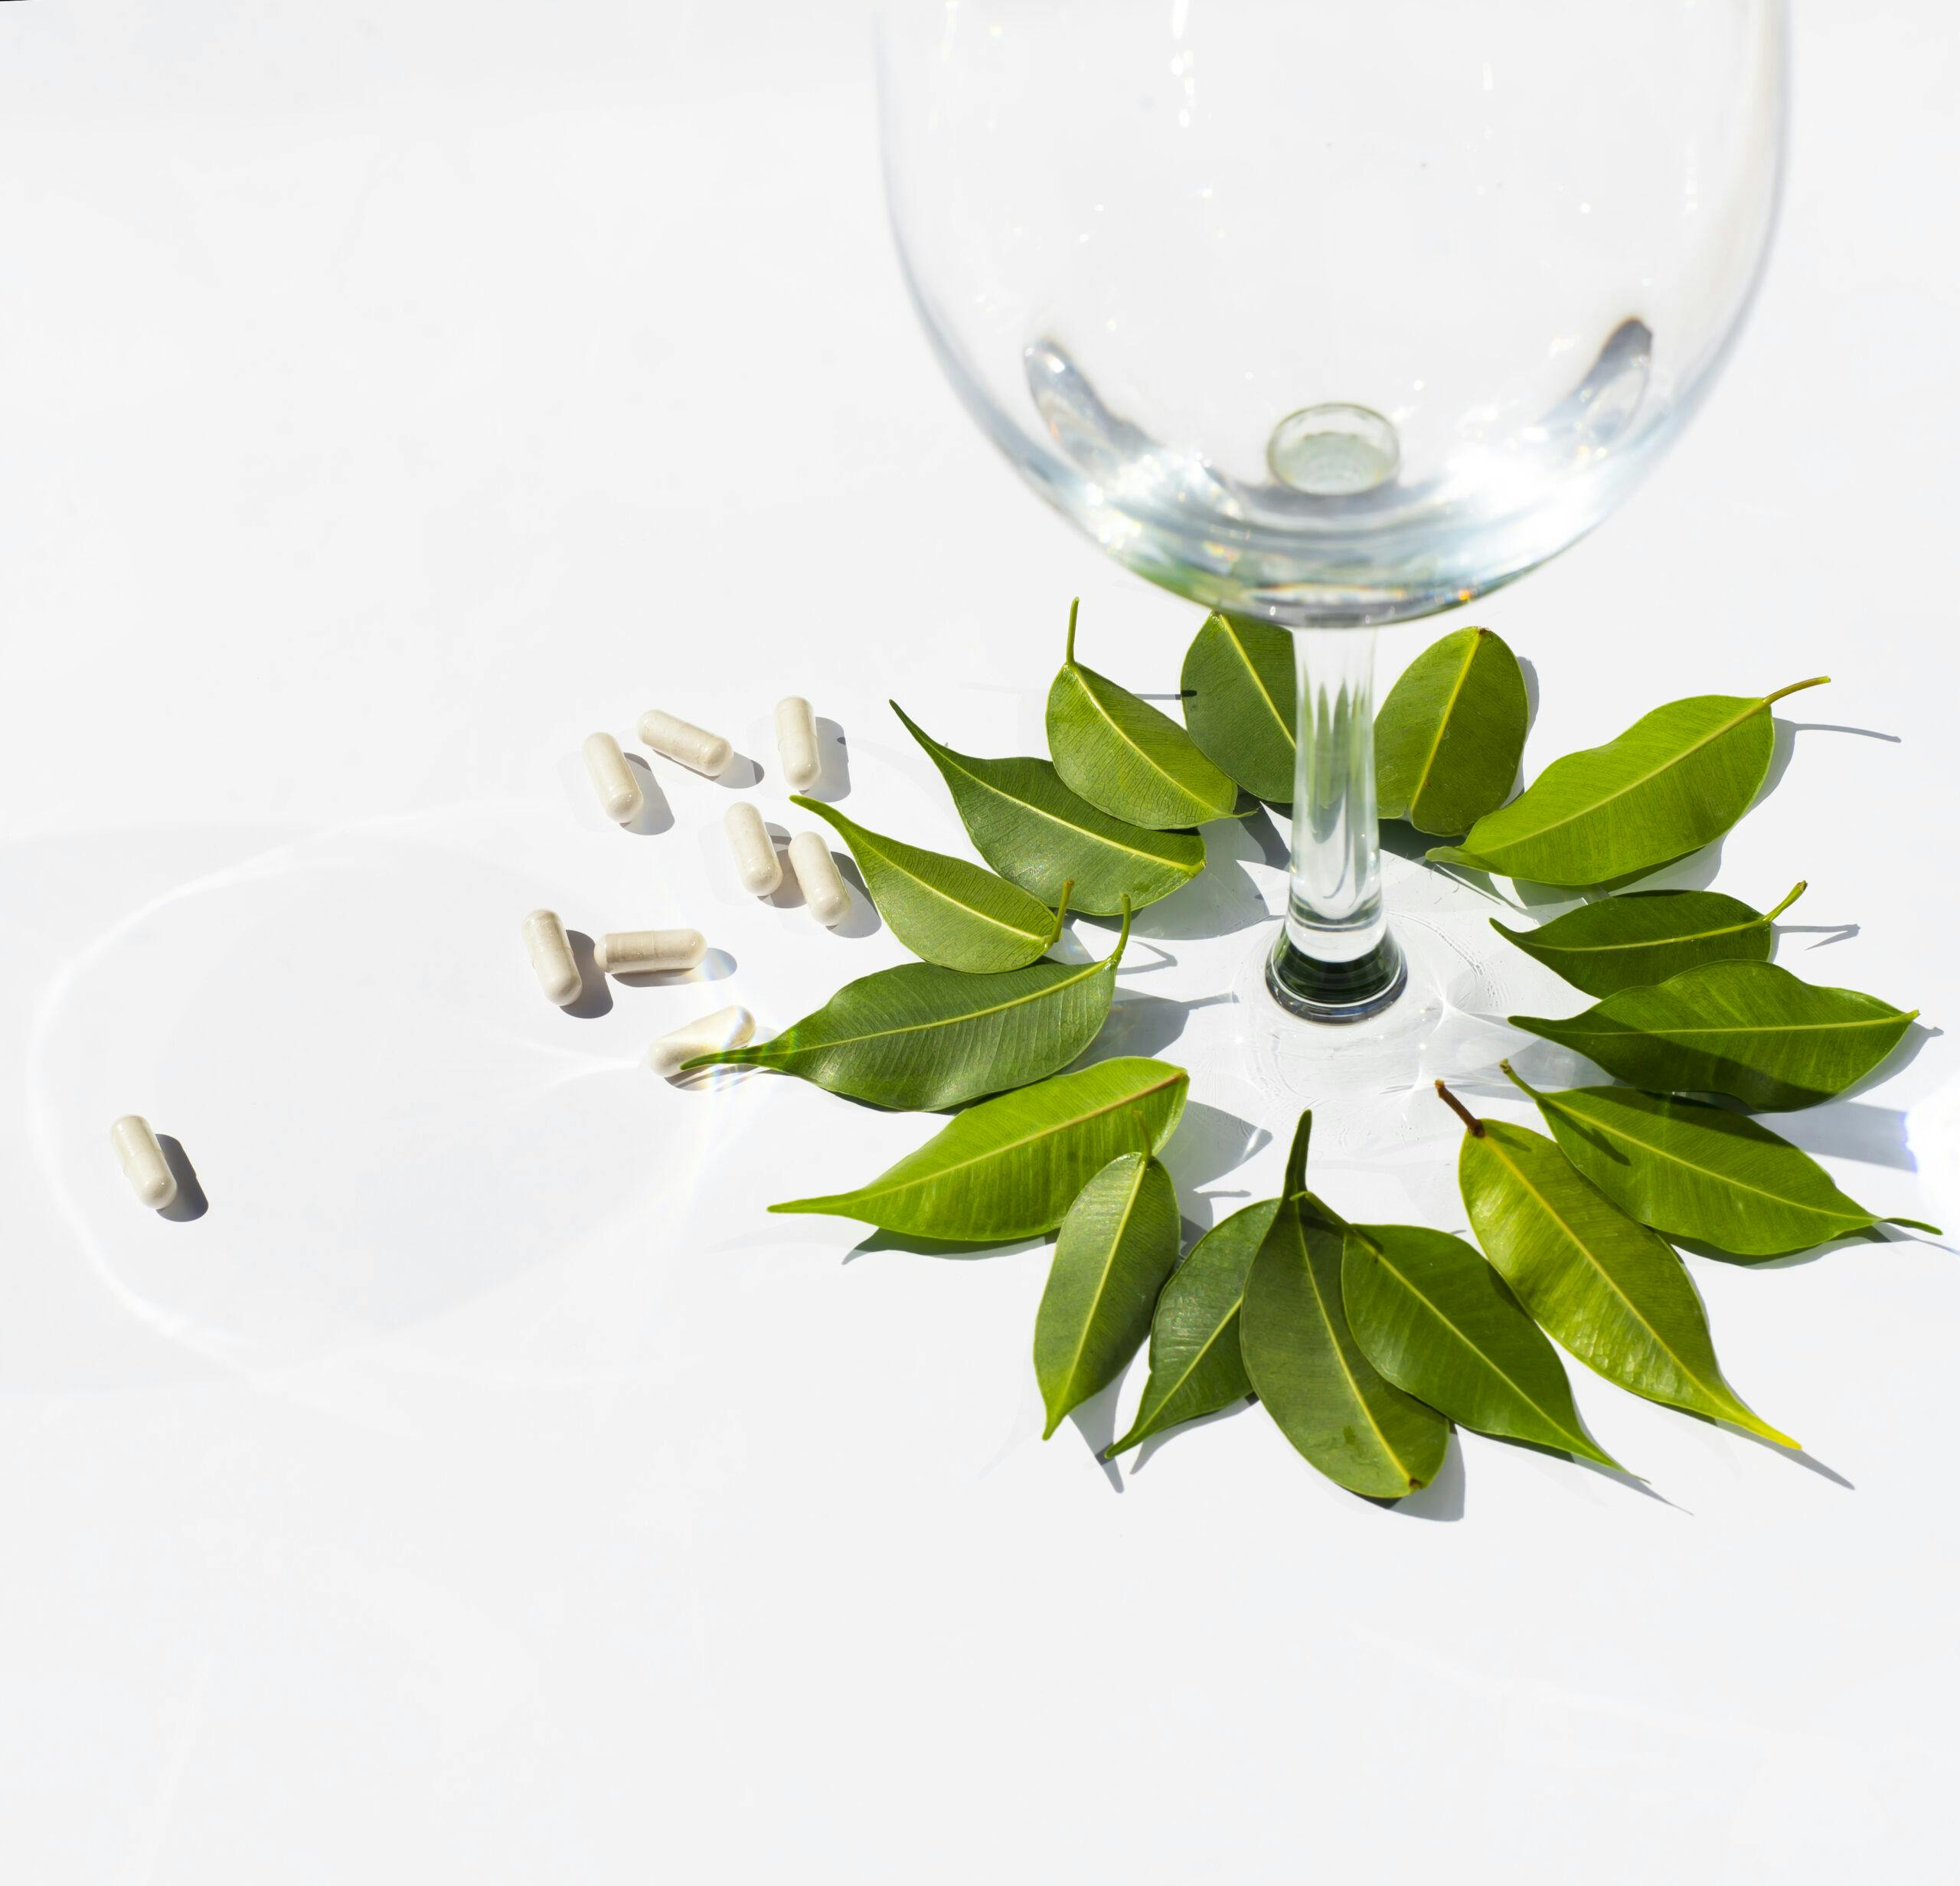 kratom pills plant leaves and wine glass